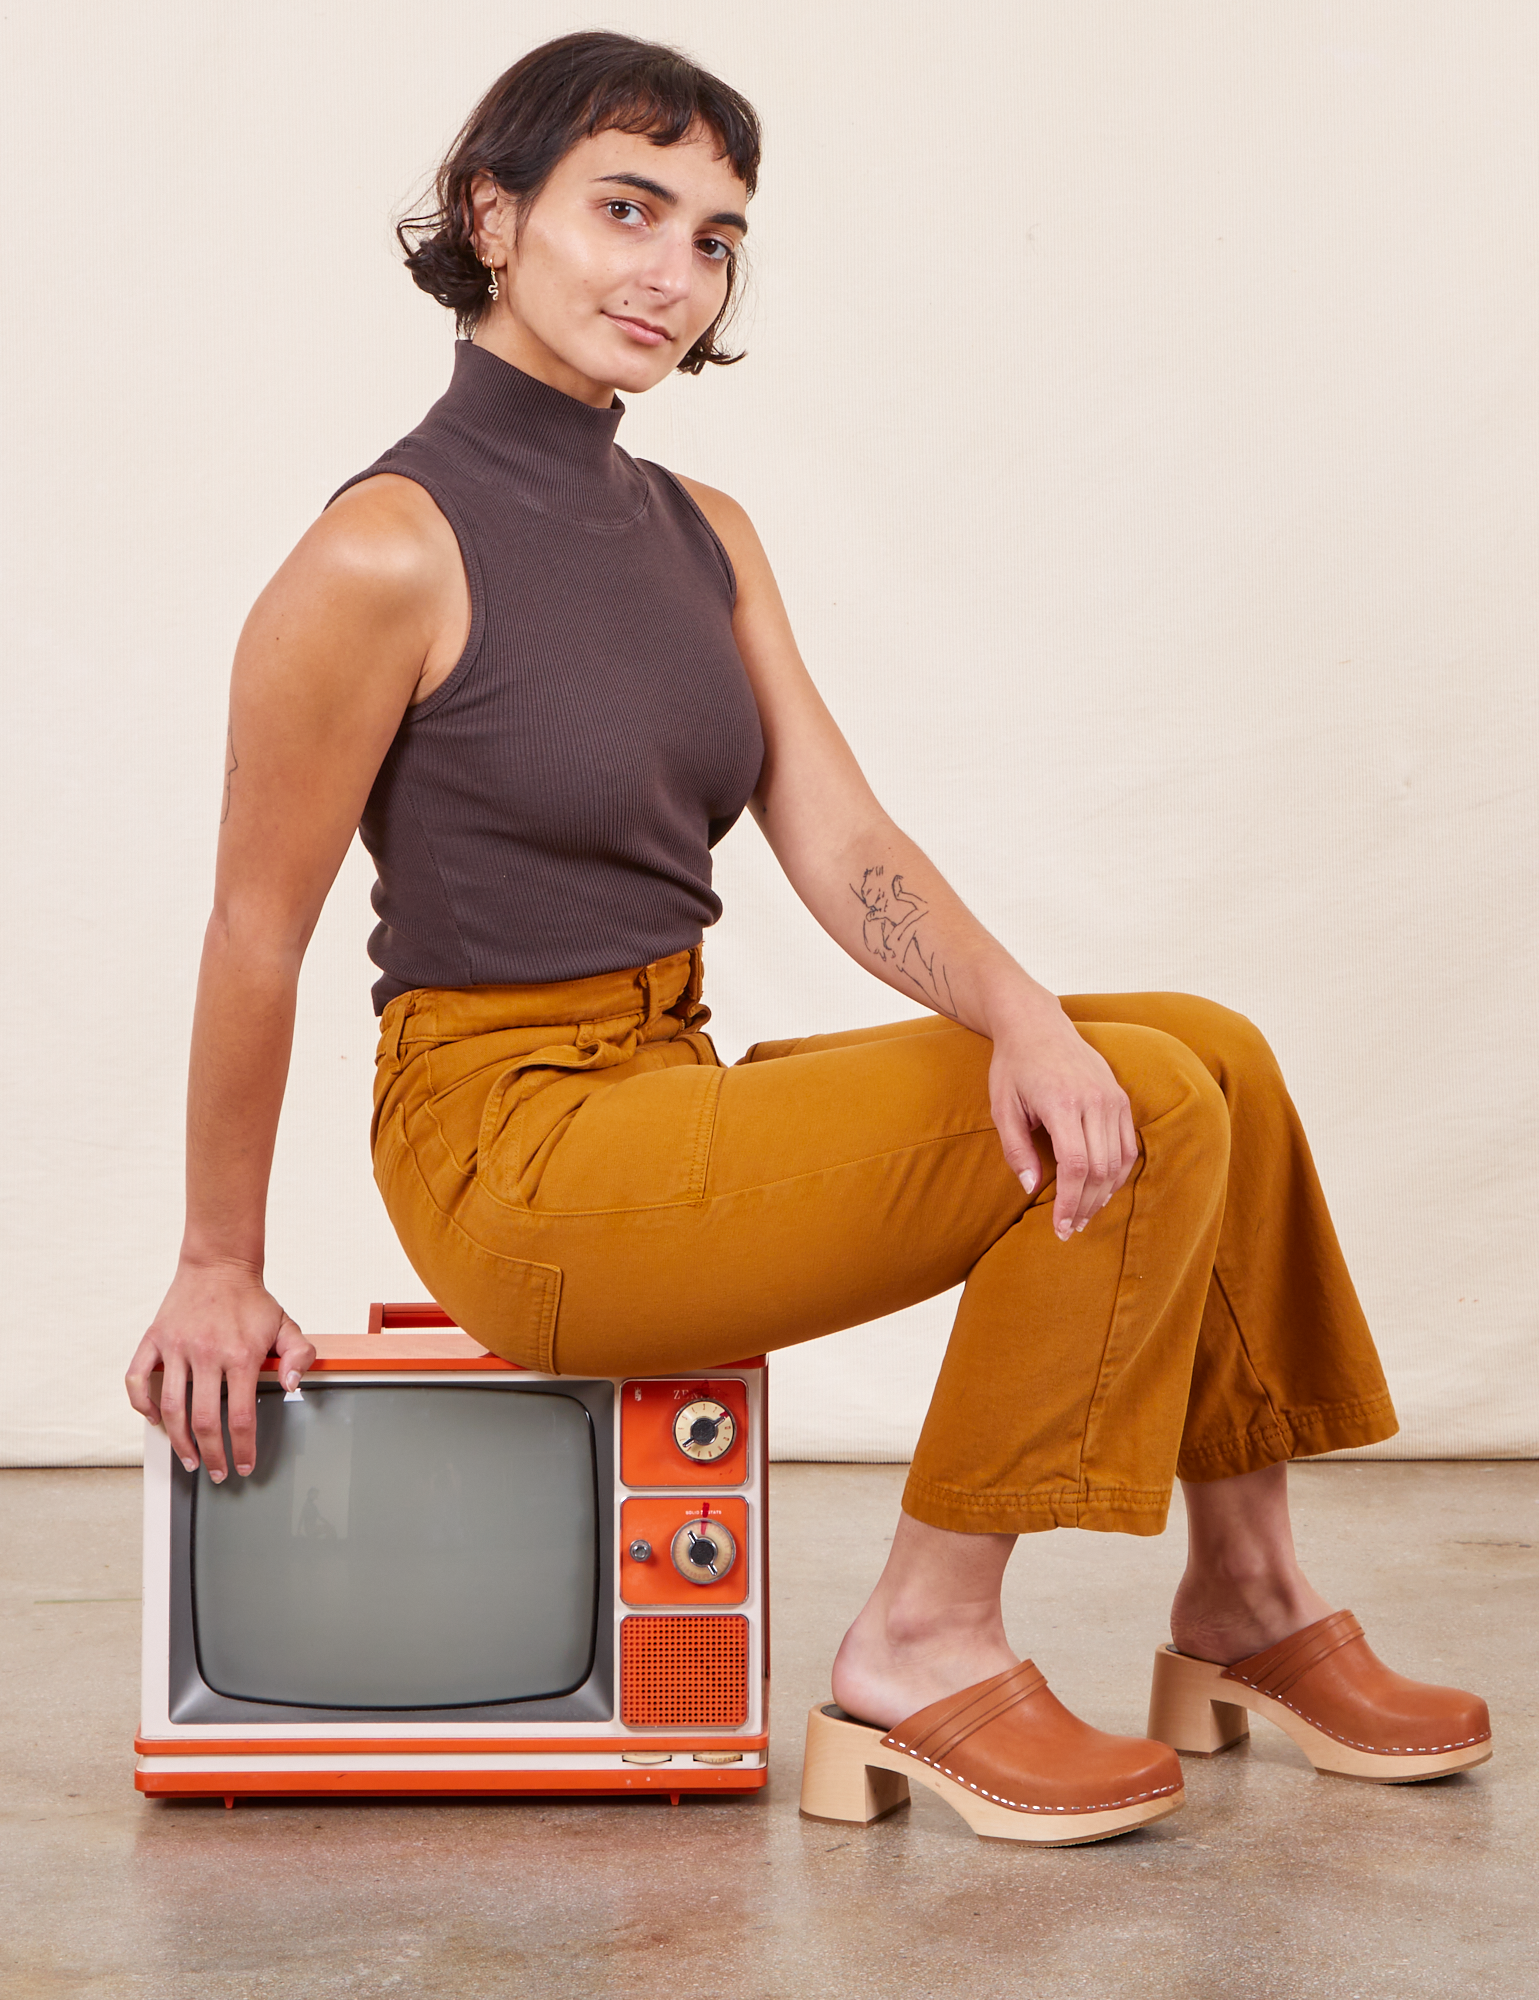 Soraya is sitting sideways on a small orange vintage tv wearing Work Pants in Spicy Mustard and espresso brown Sleeveless Turtleneck